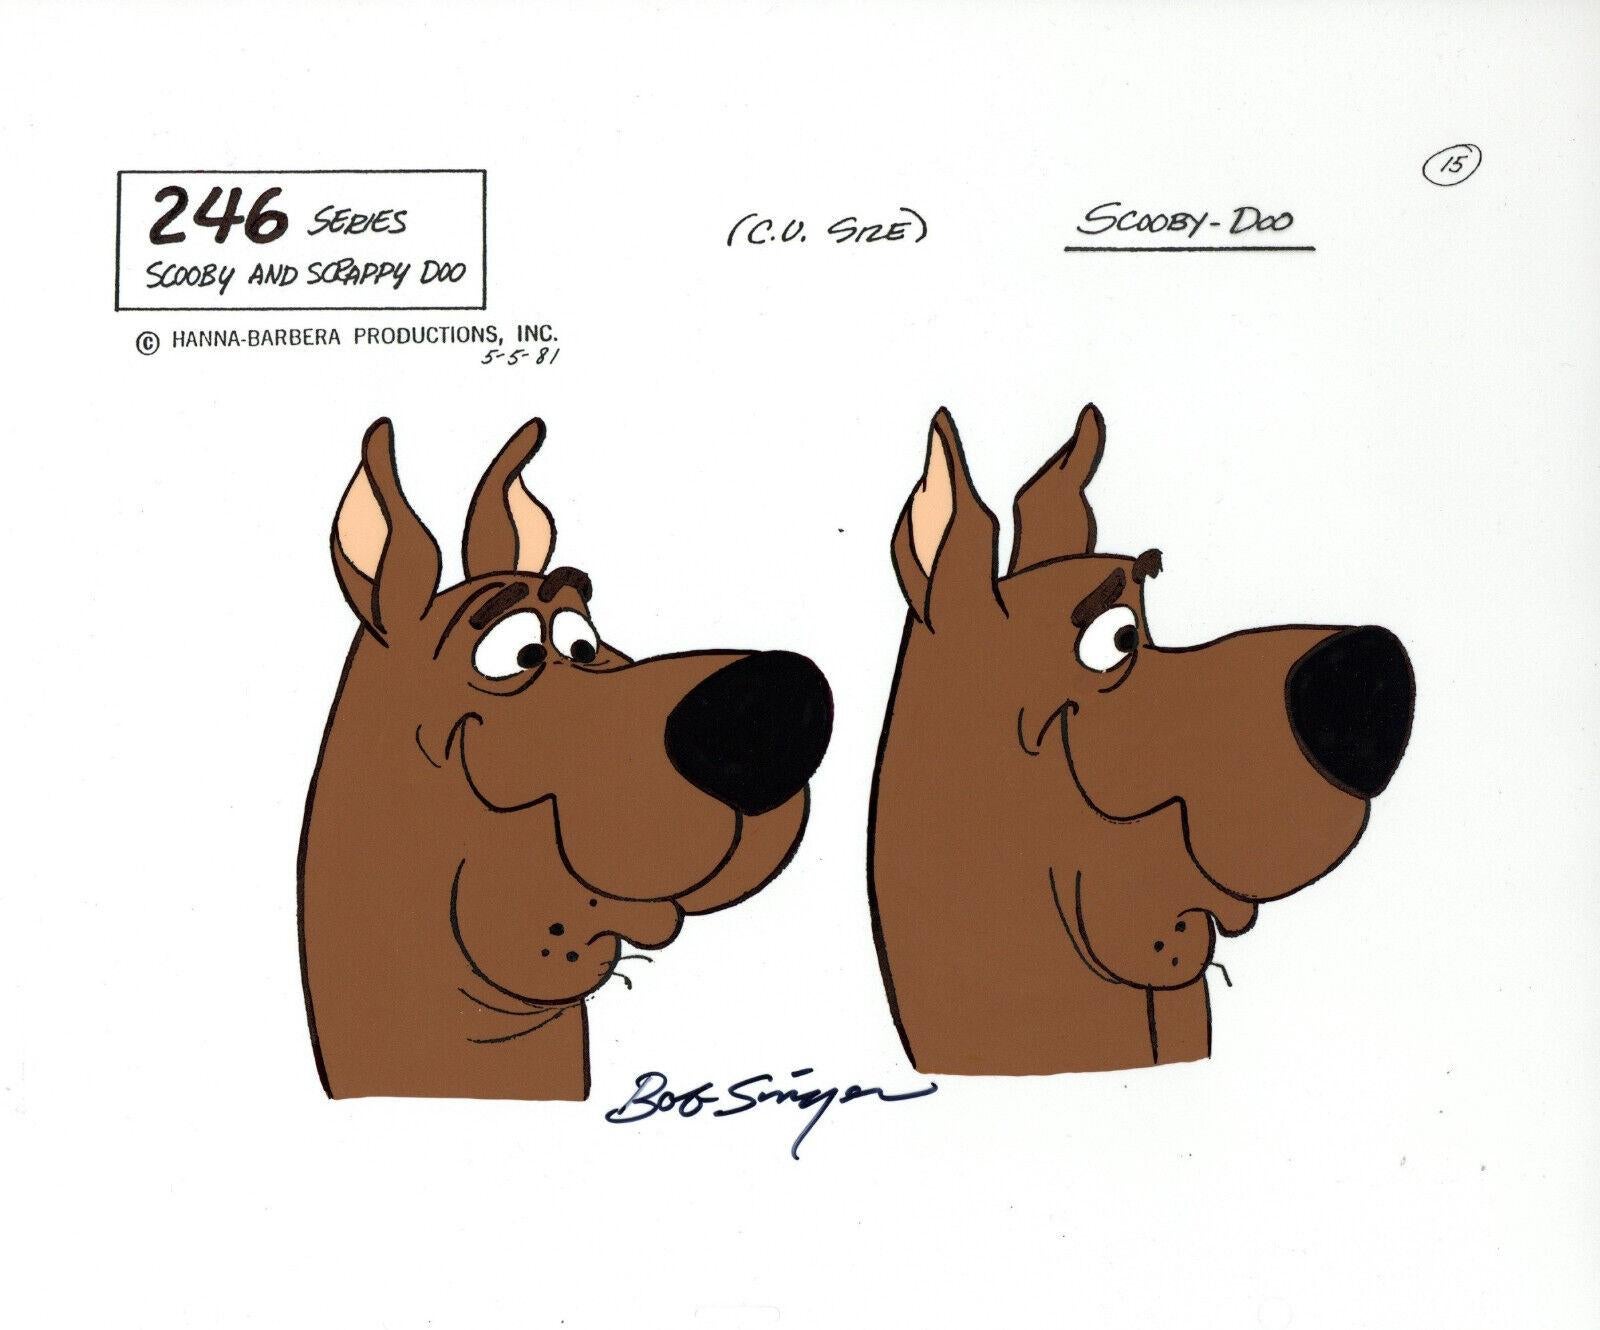 Scooby-Doo Original Model Sheet of 2 Heads signed by Bob Singer - Art by Hanna Barbera Studio Artists